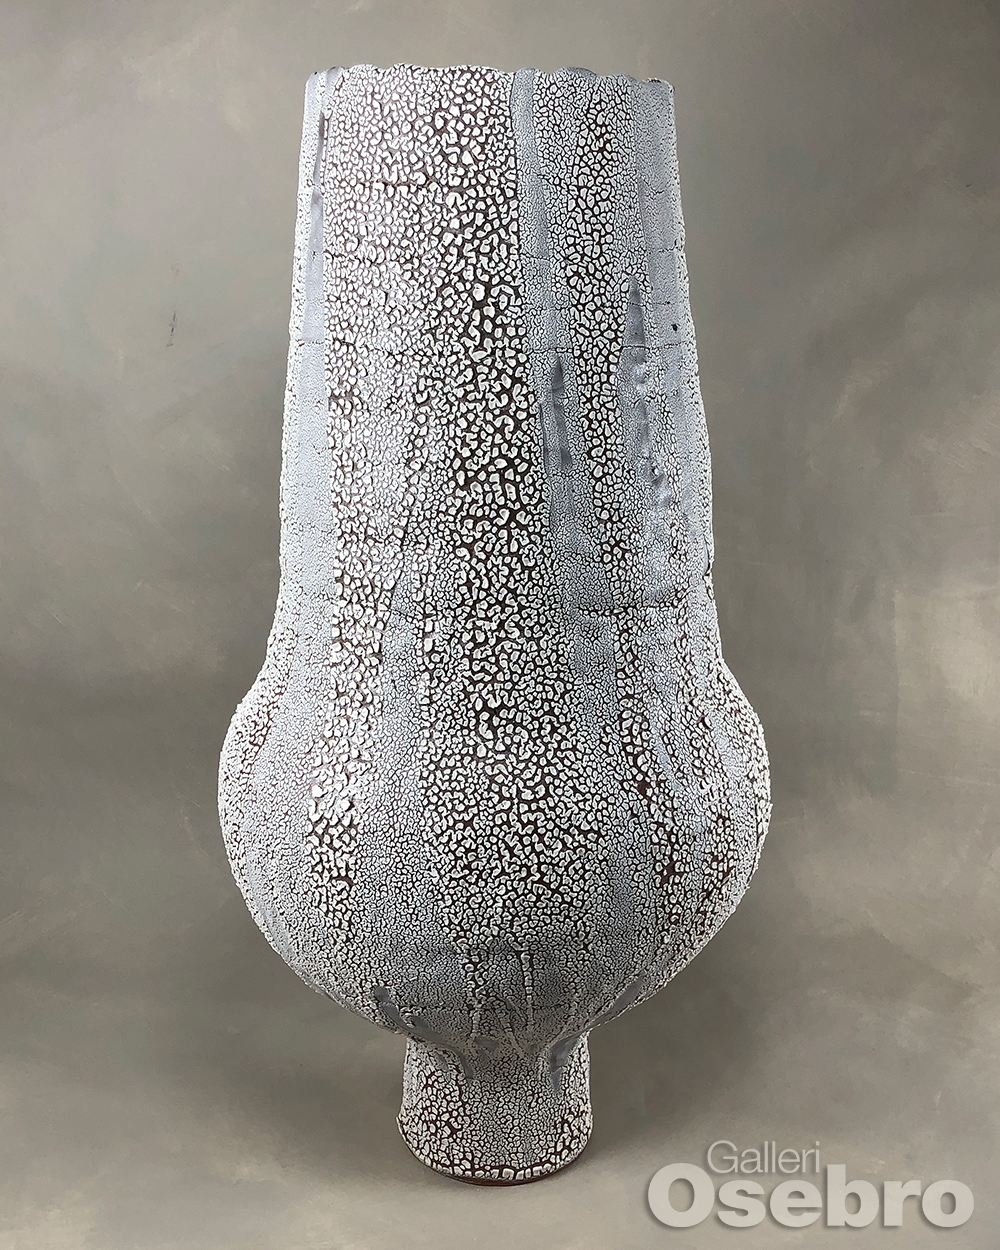 Haukom, Hanne - Brun krukke ca. 63 cm